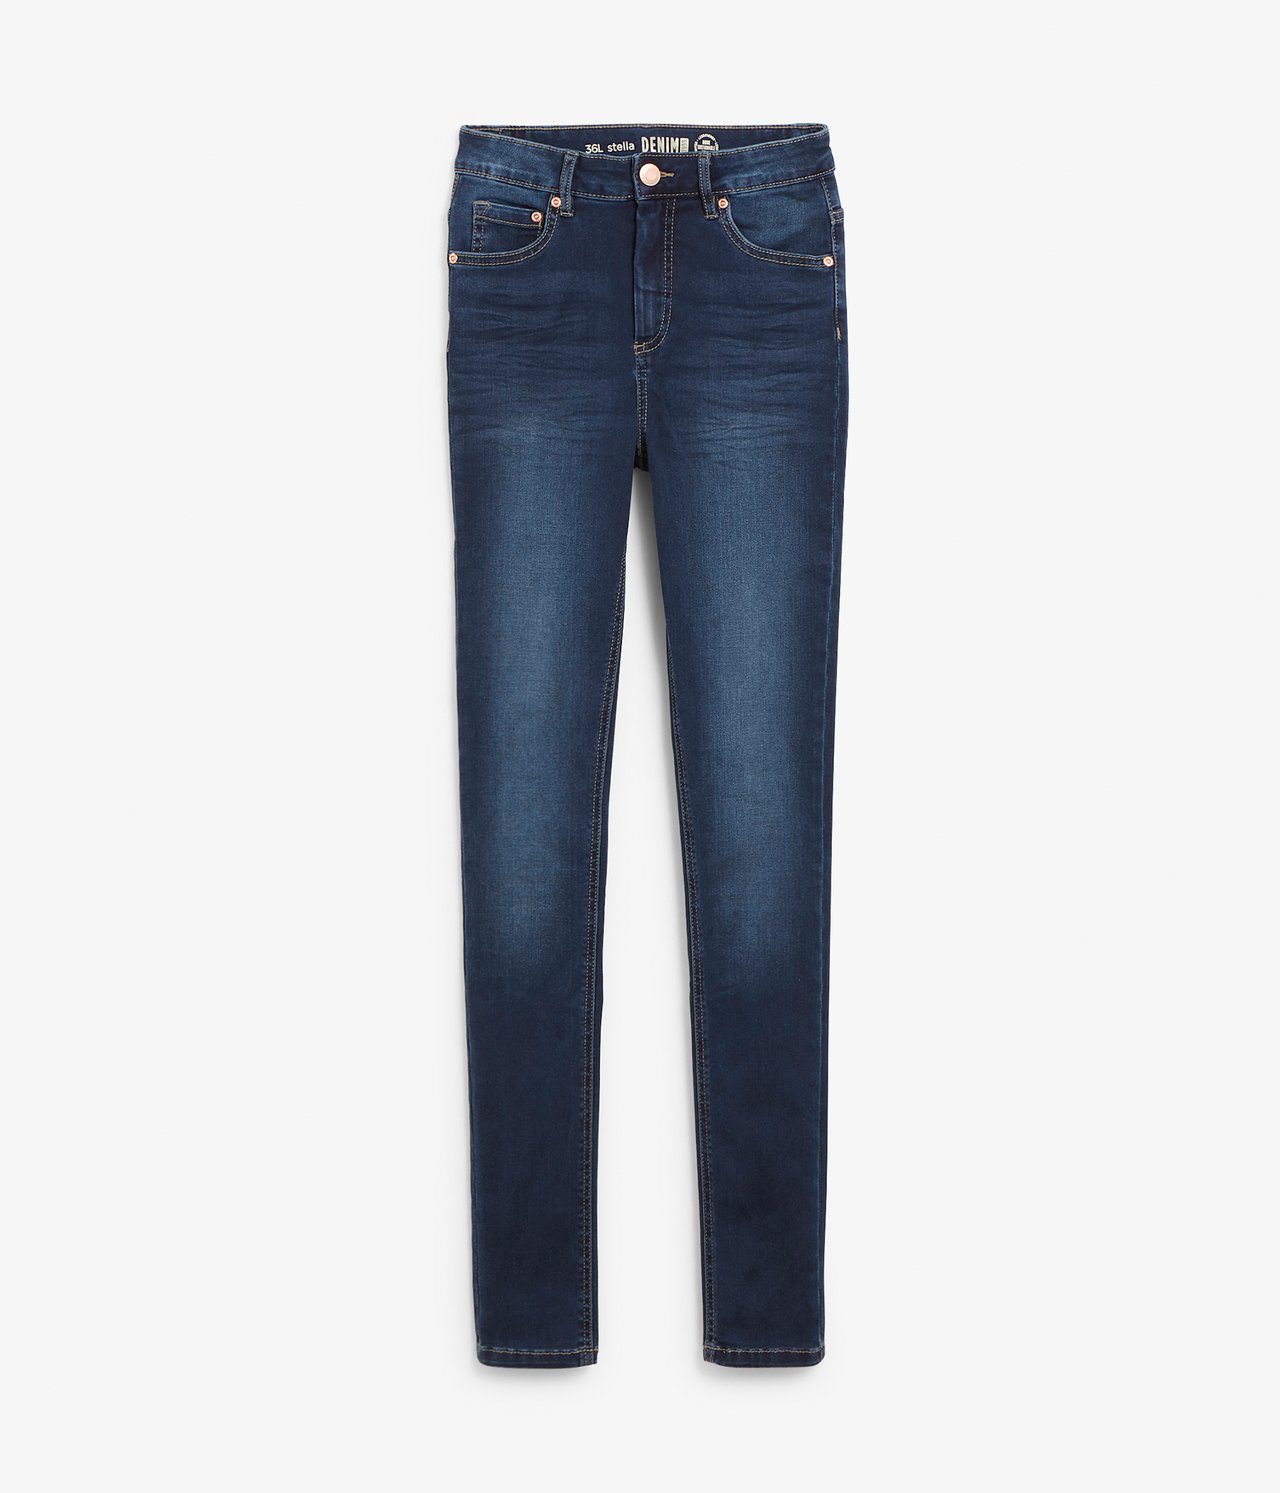 Super slim jeans extra long leg Mörk denim - null - 5